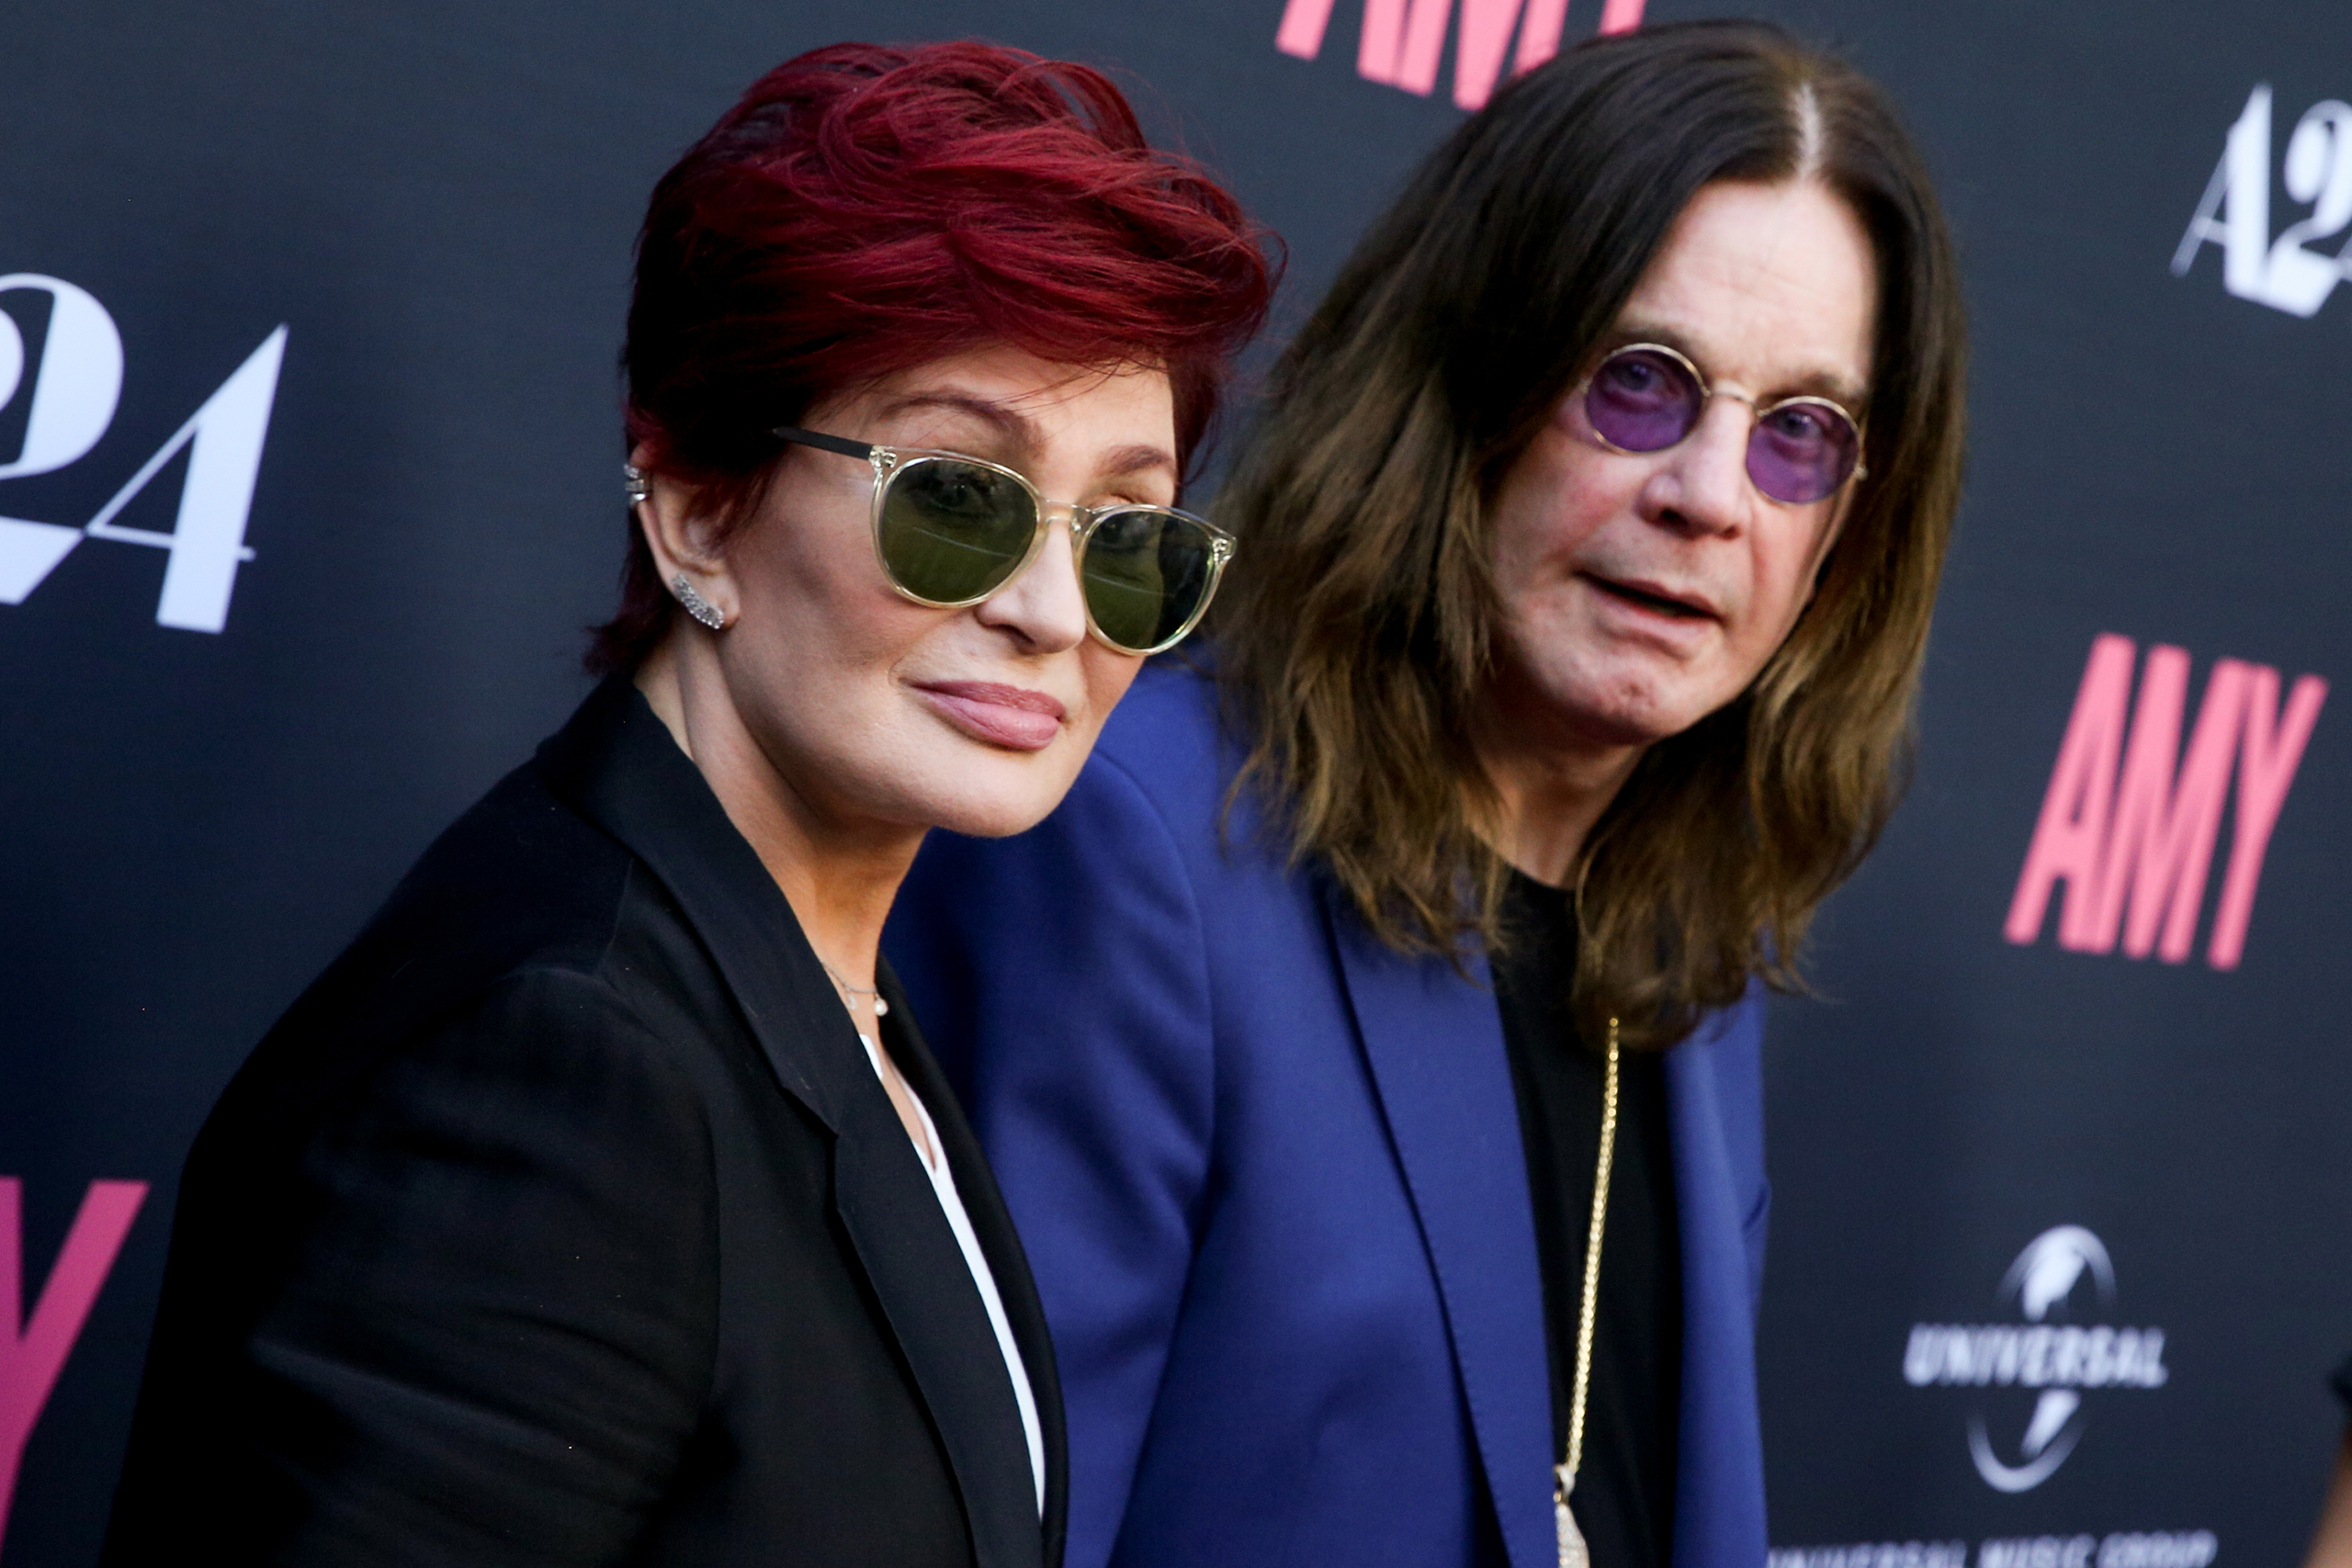 Sharon Osbourne, left, and Ozzy Osbourne arrive at the LA Premiere of 